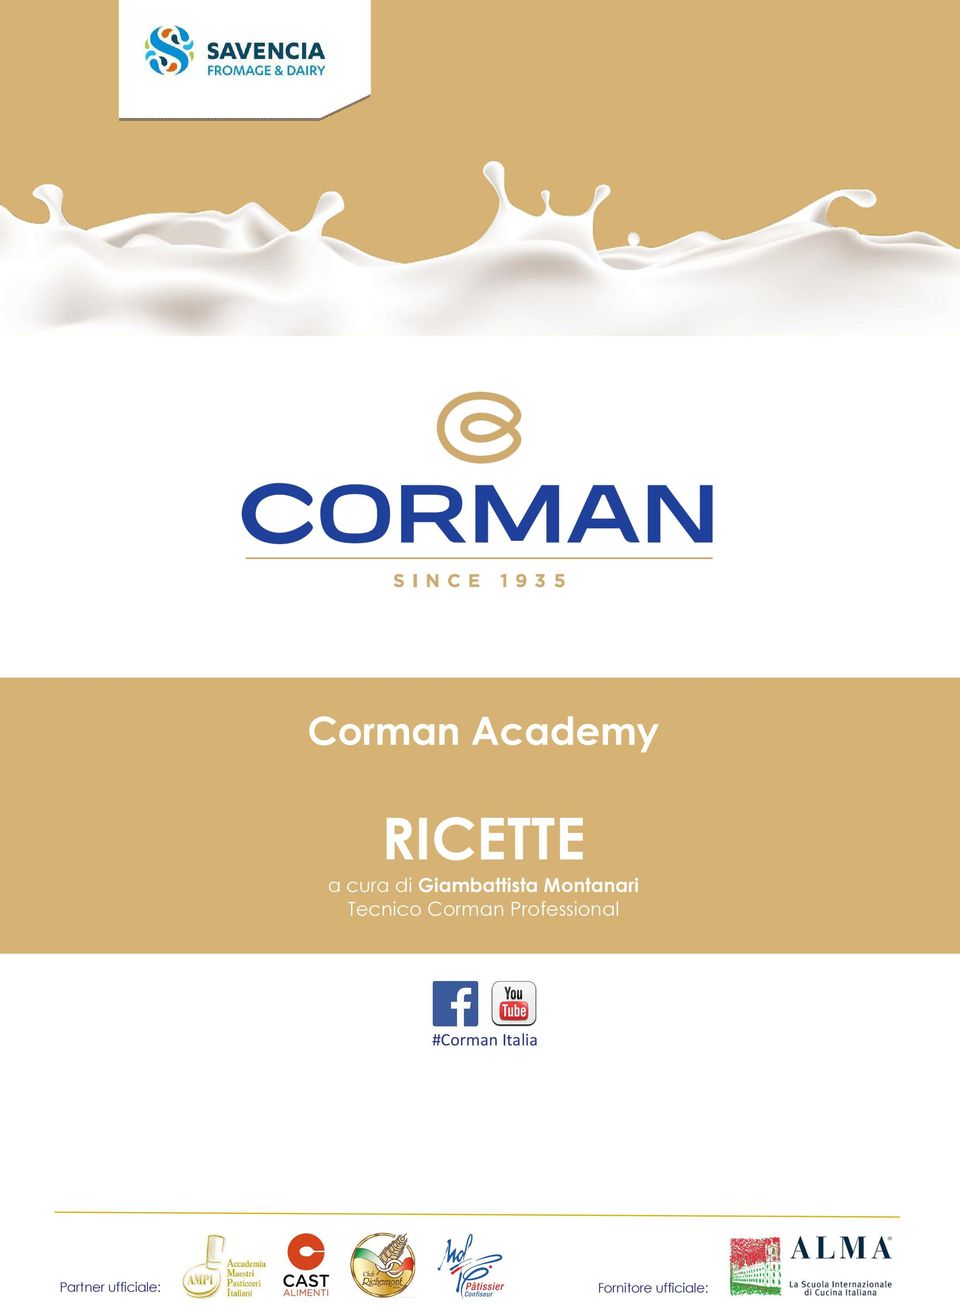 Corman Professional #Corman Italia